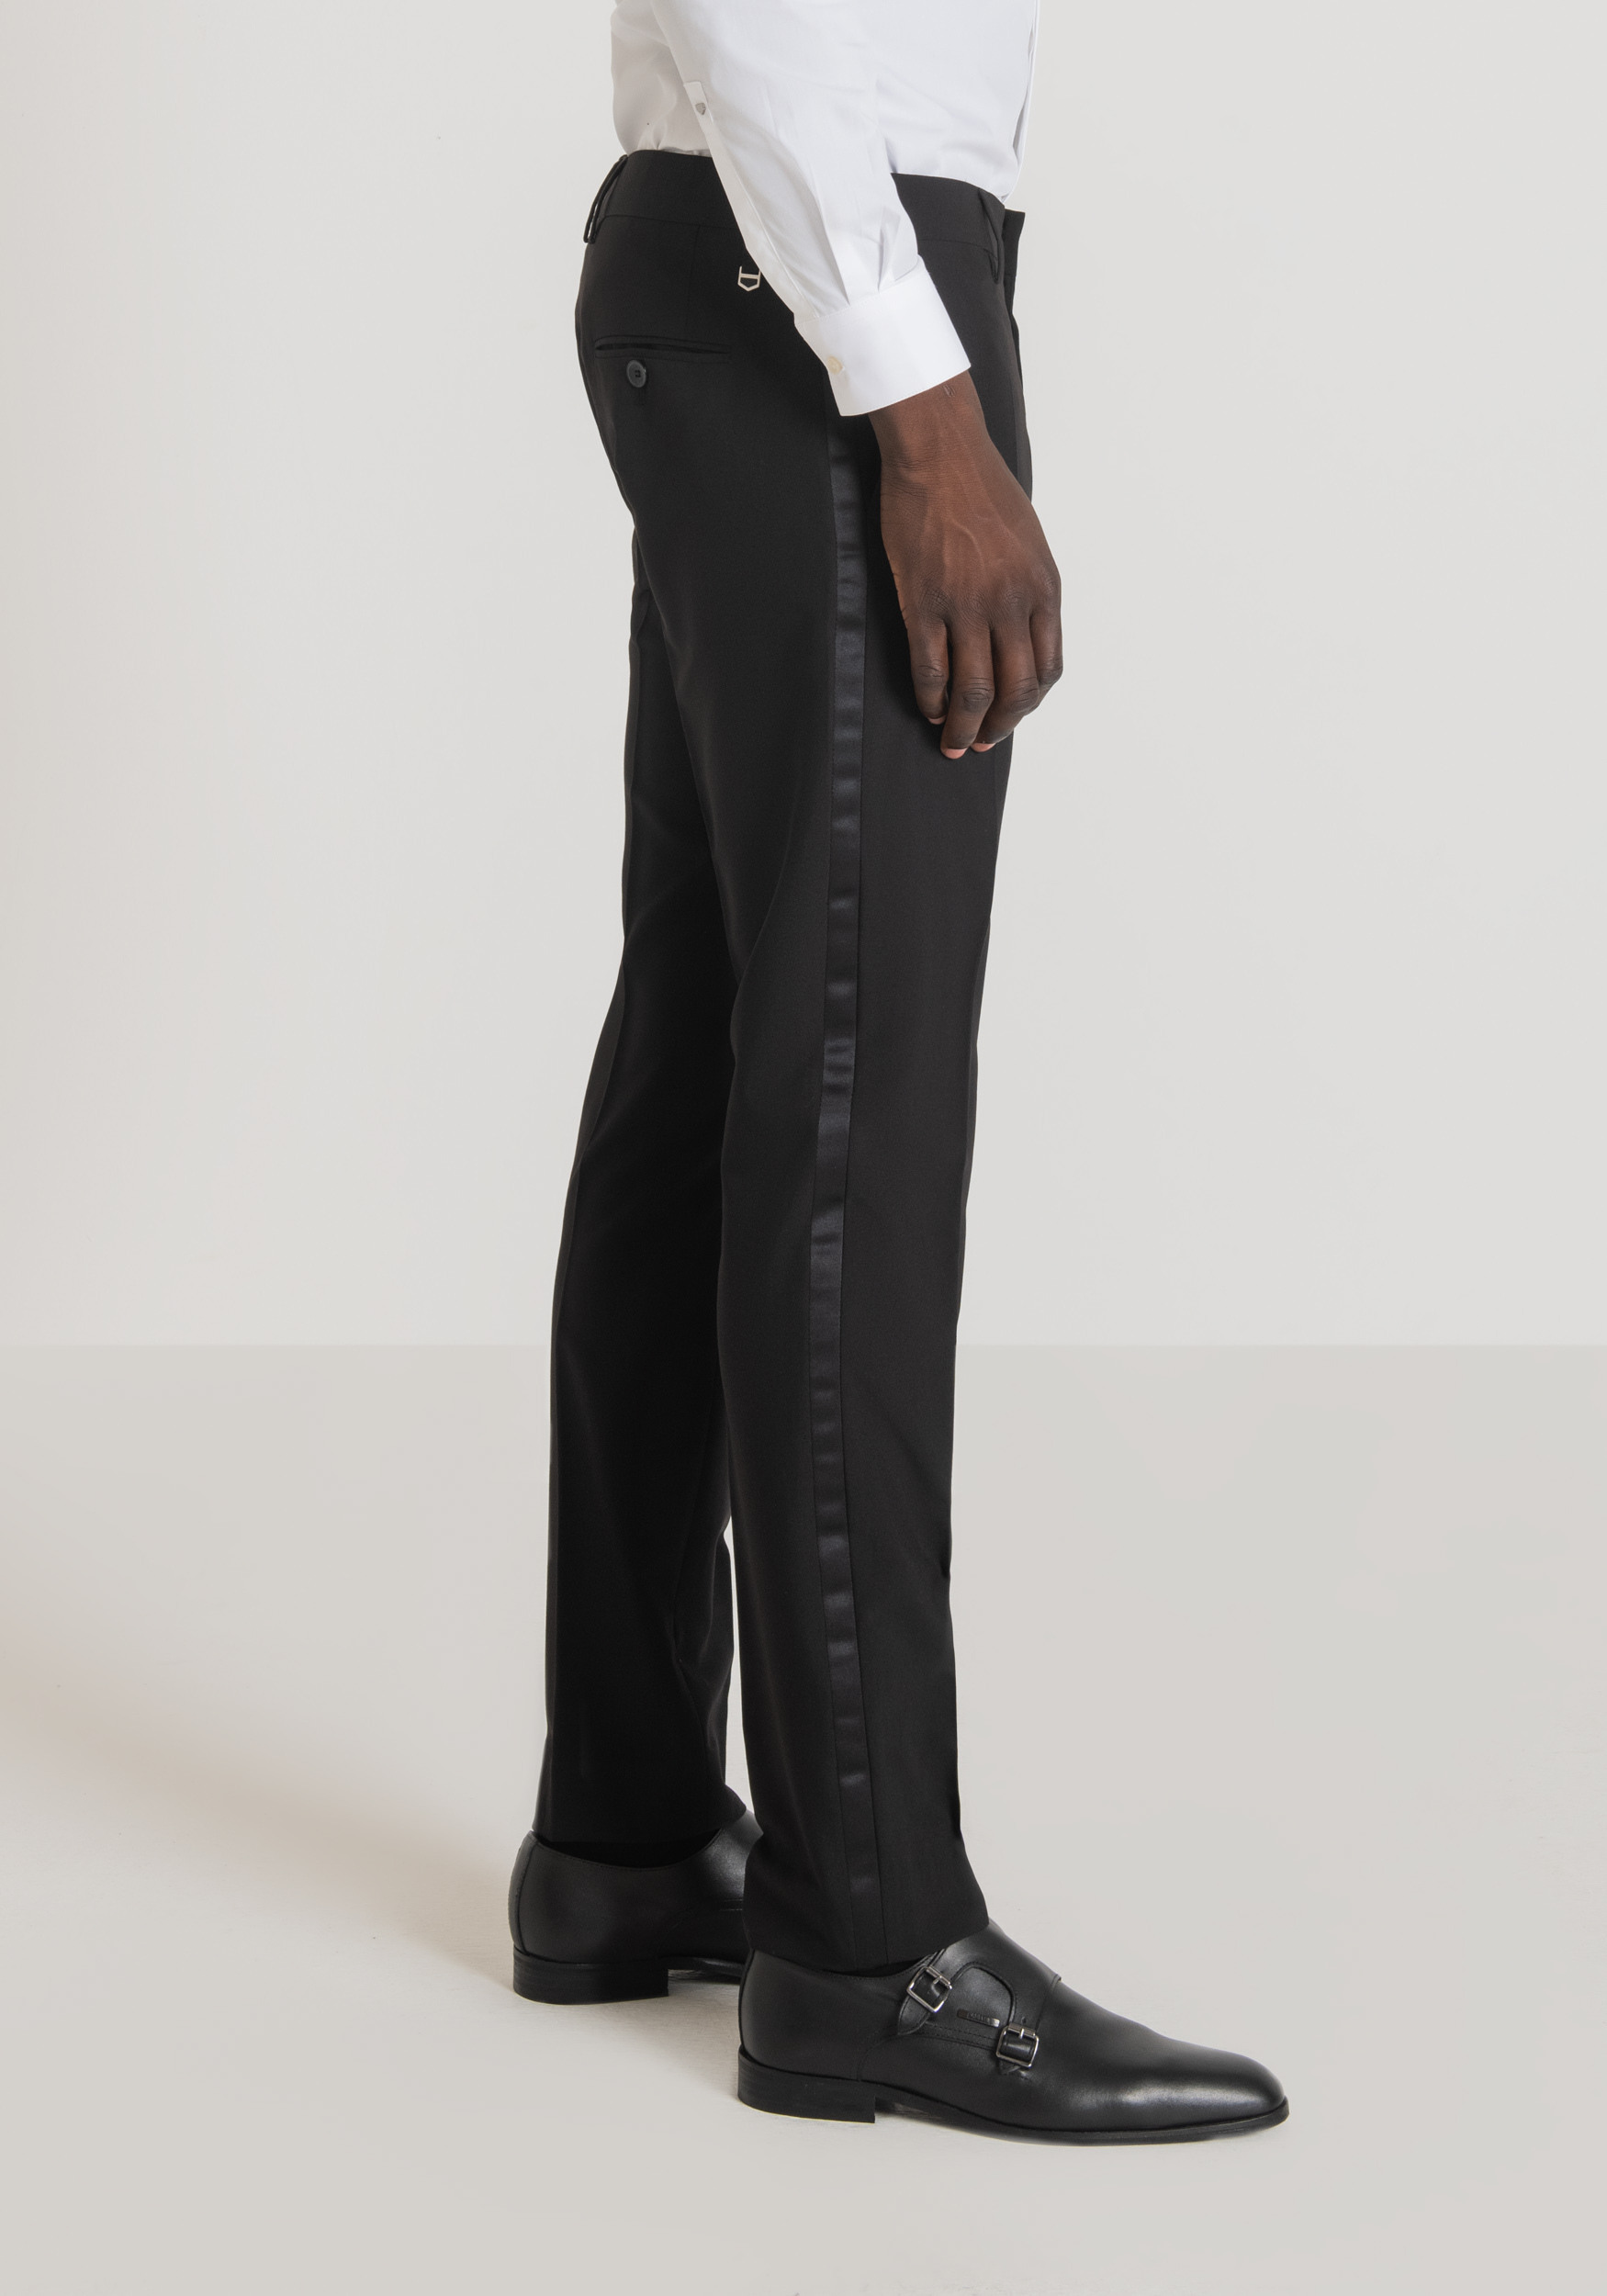 Antony Morato Pantalon Slim Fit Nina En Viscose Melangee Elastique Avec Details En Satin Noir | Homme Pantalons